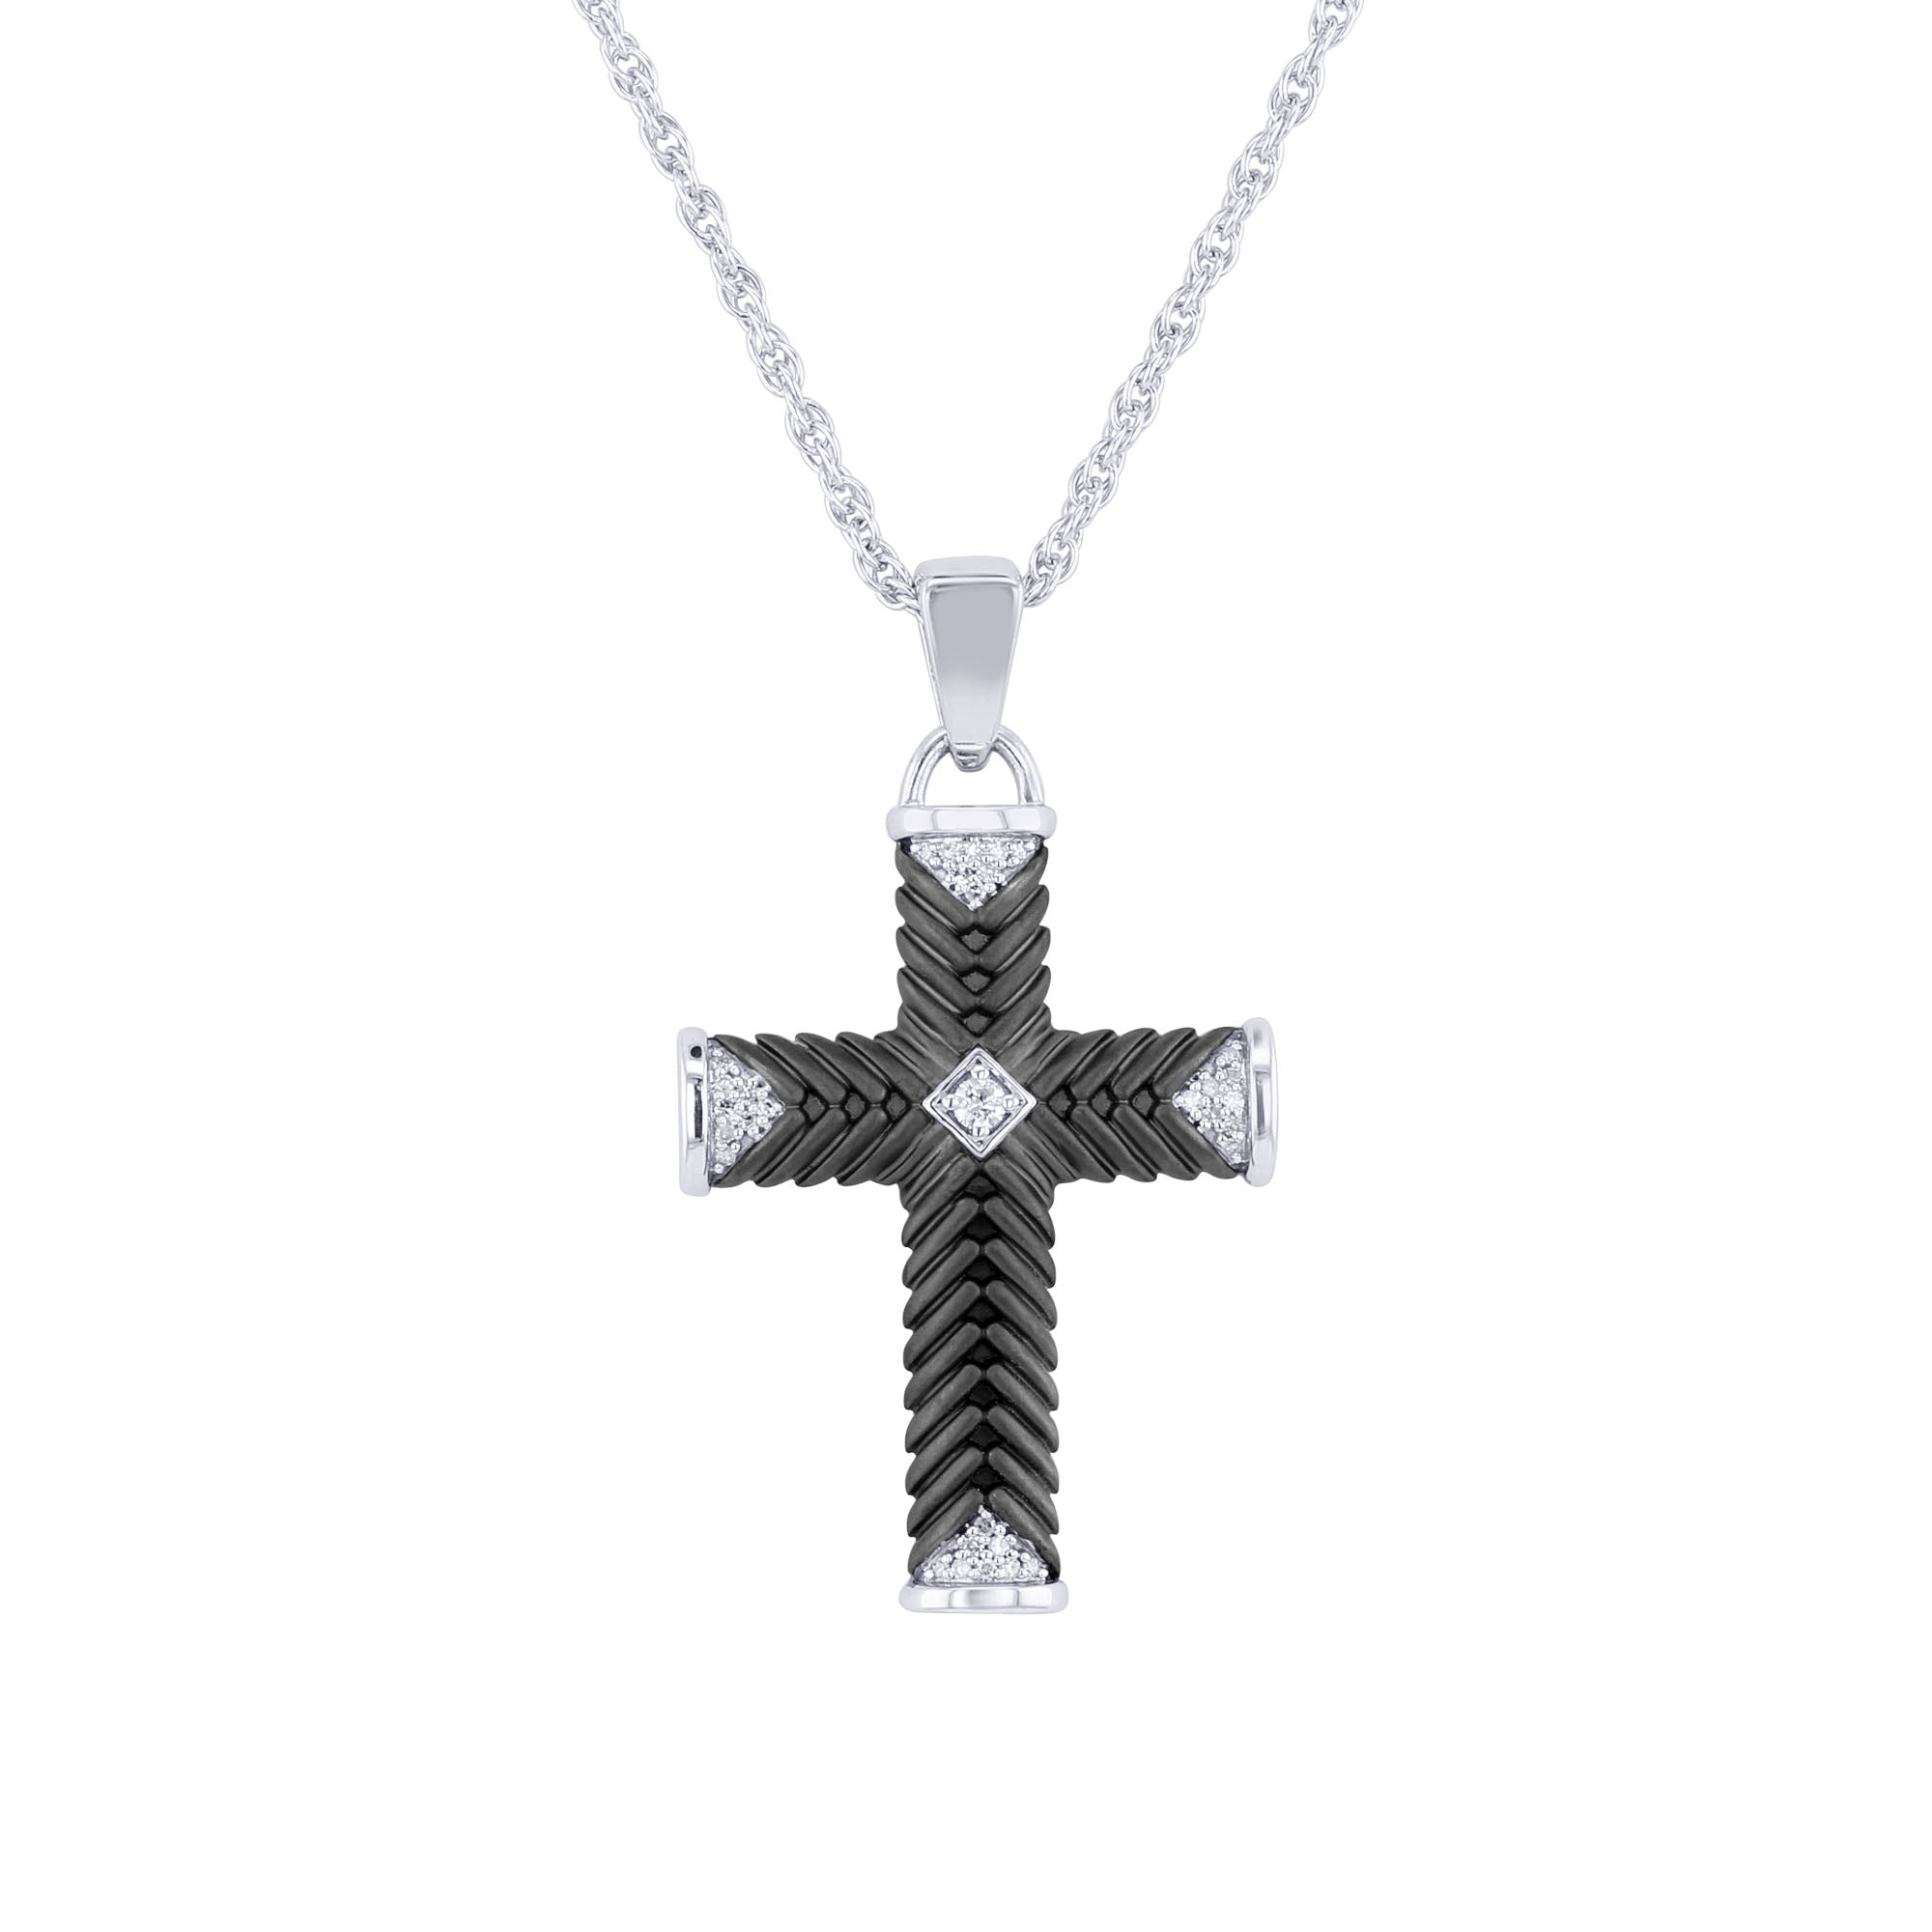 Woven Cross Diamond Necklace